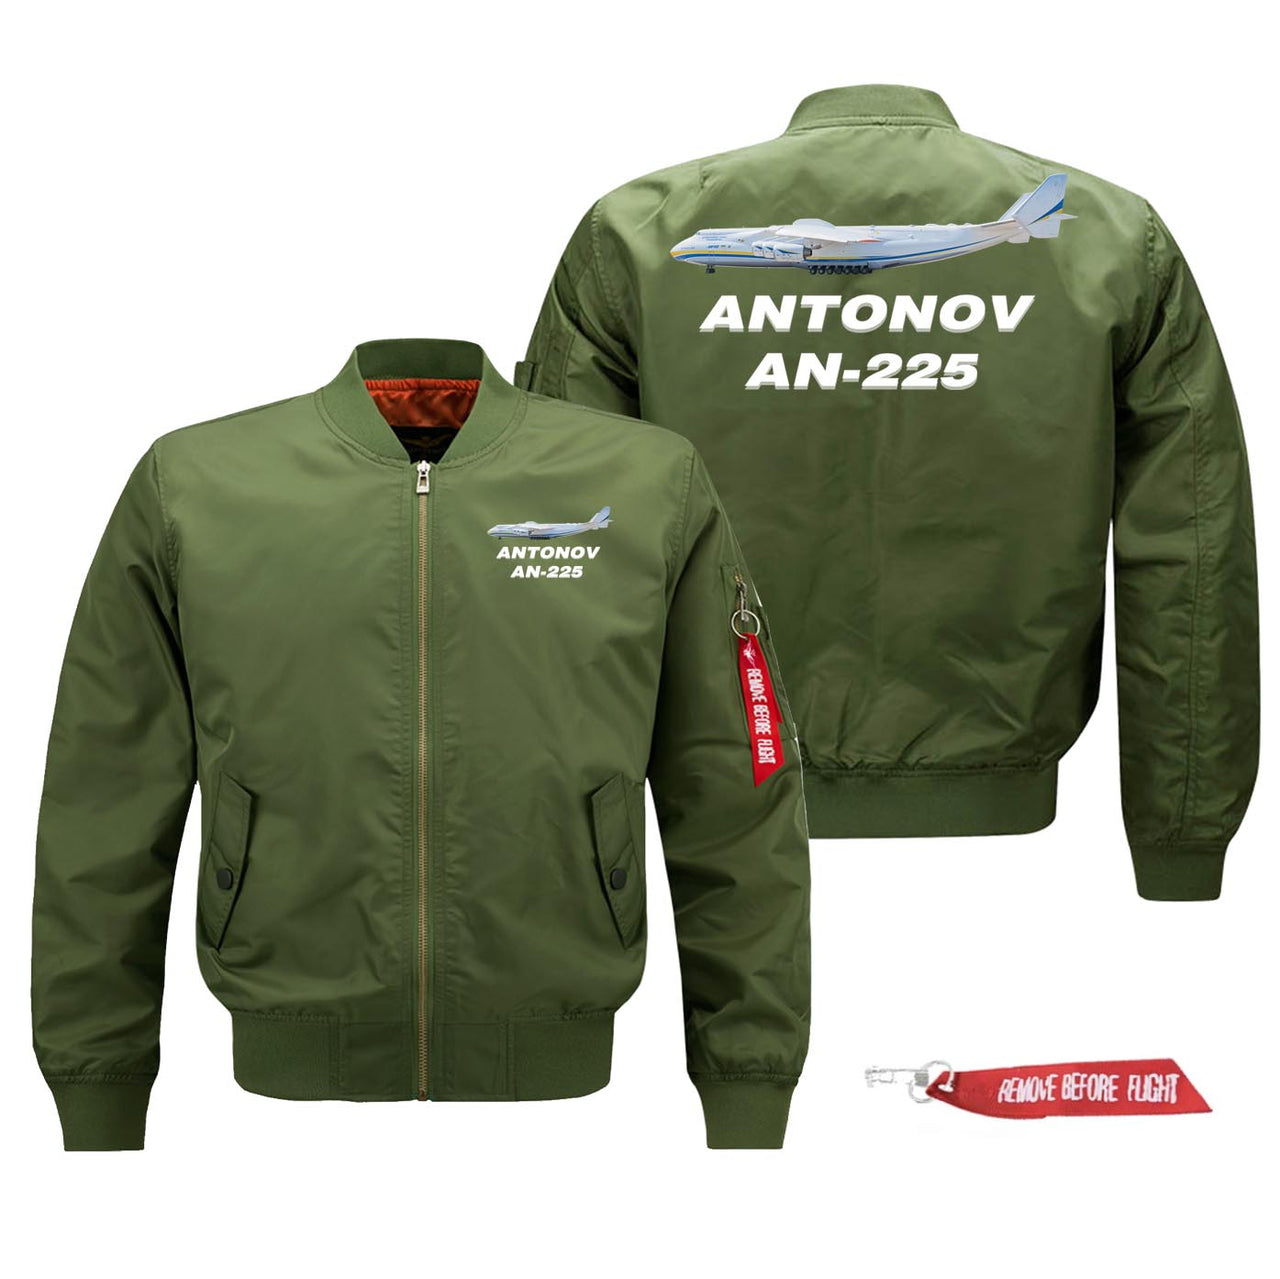 The Antonov AN-225 Designed Pilot Jackets (Customizable)